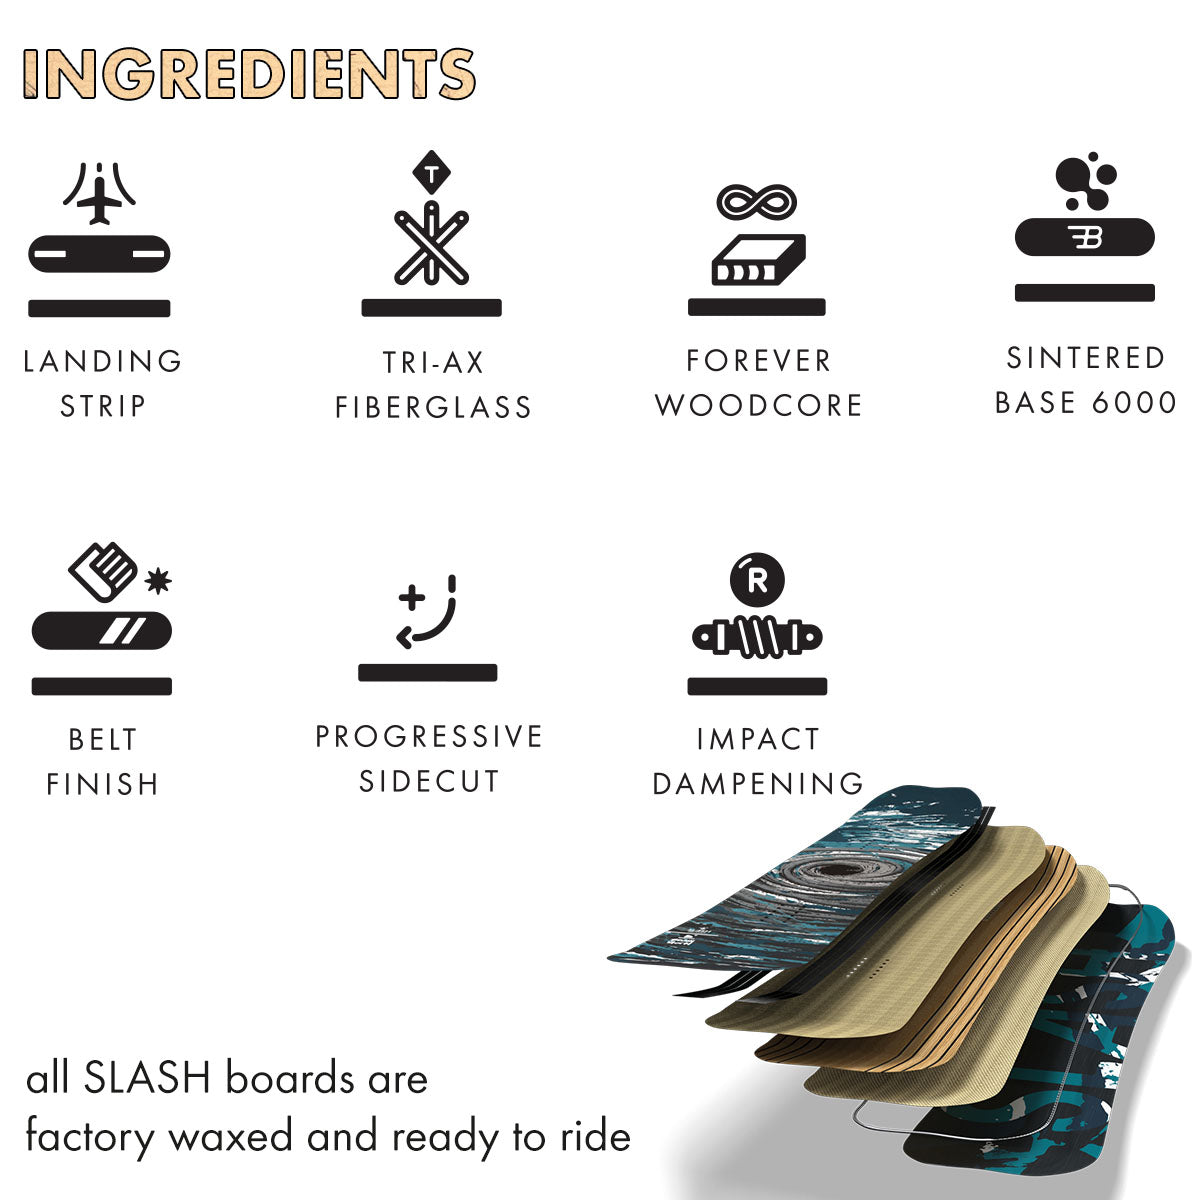 Slash ApArtment23 Brainstorm Snowboard